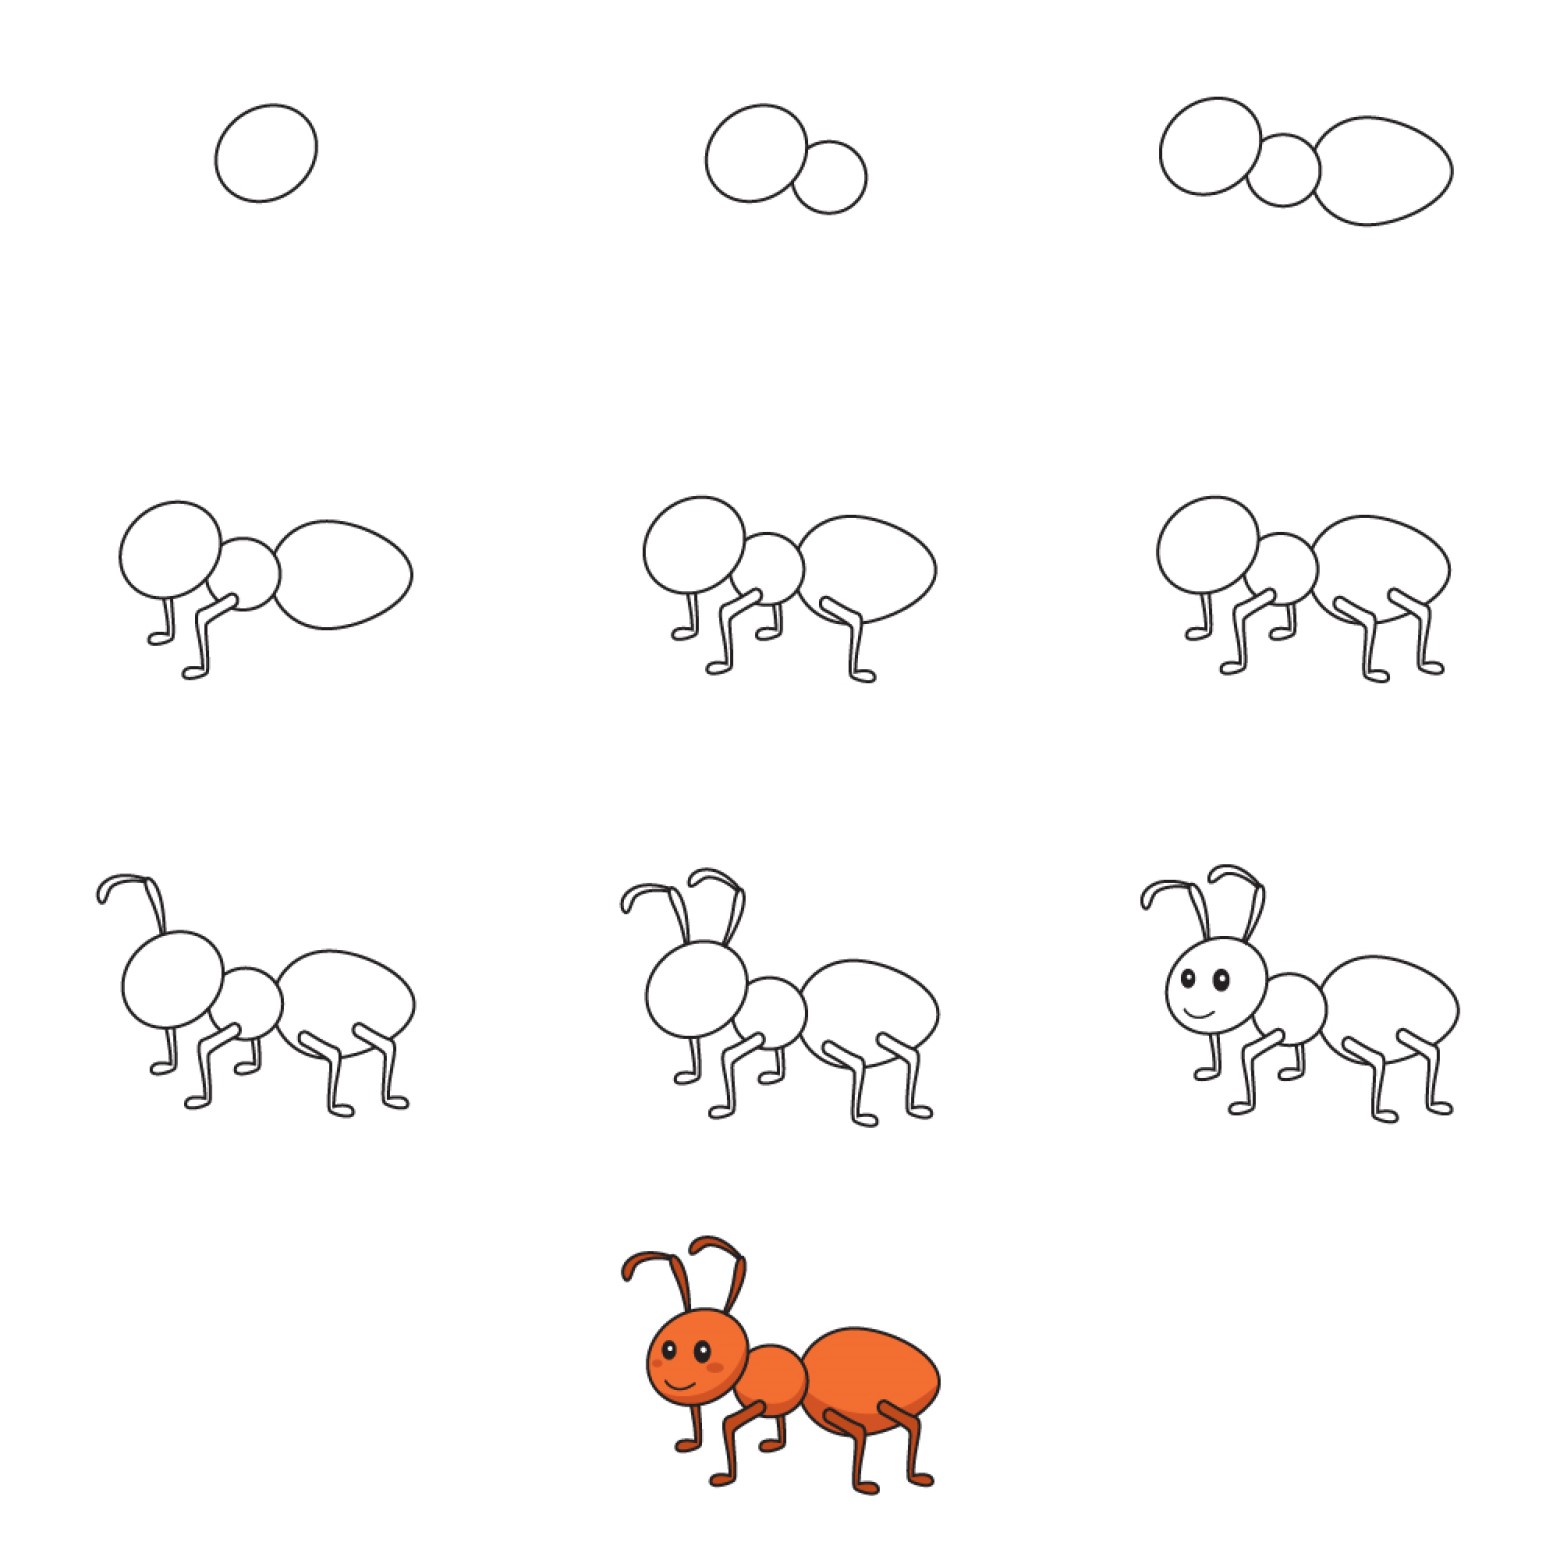 Ant idea (21) Drawing Ideas